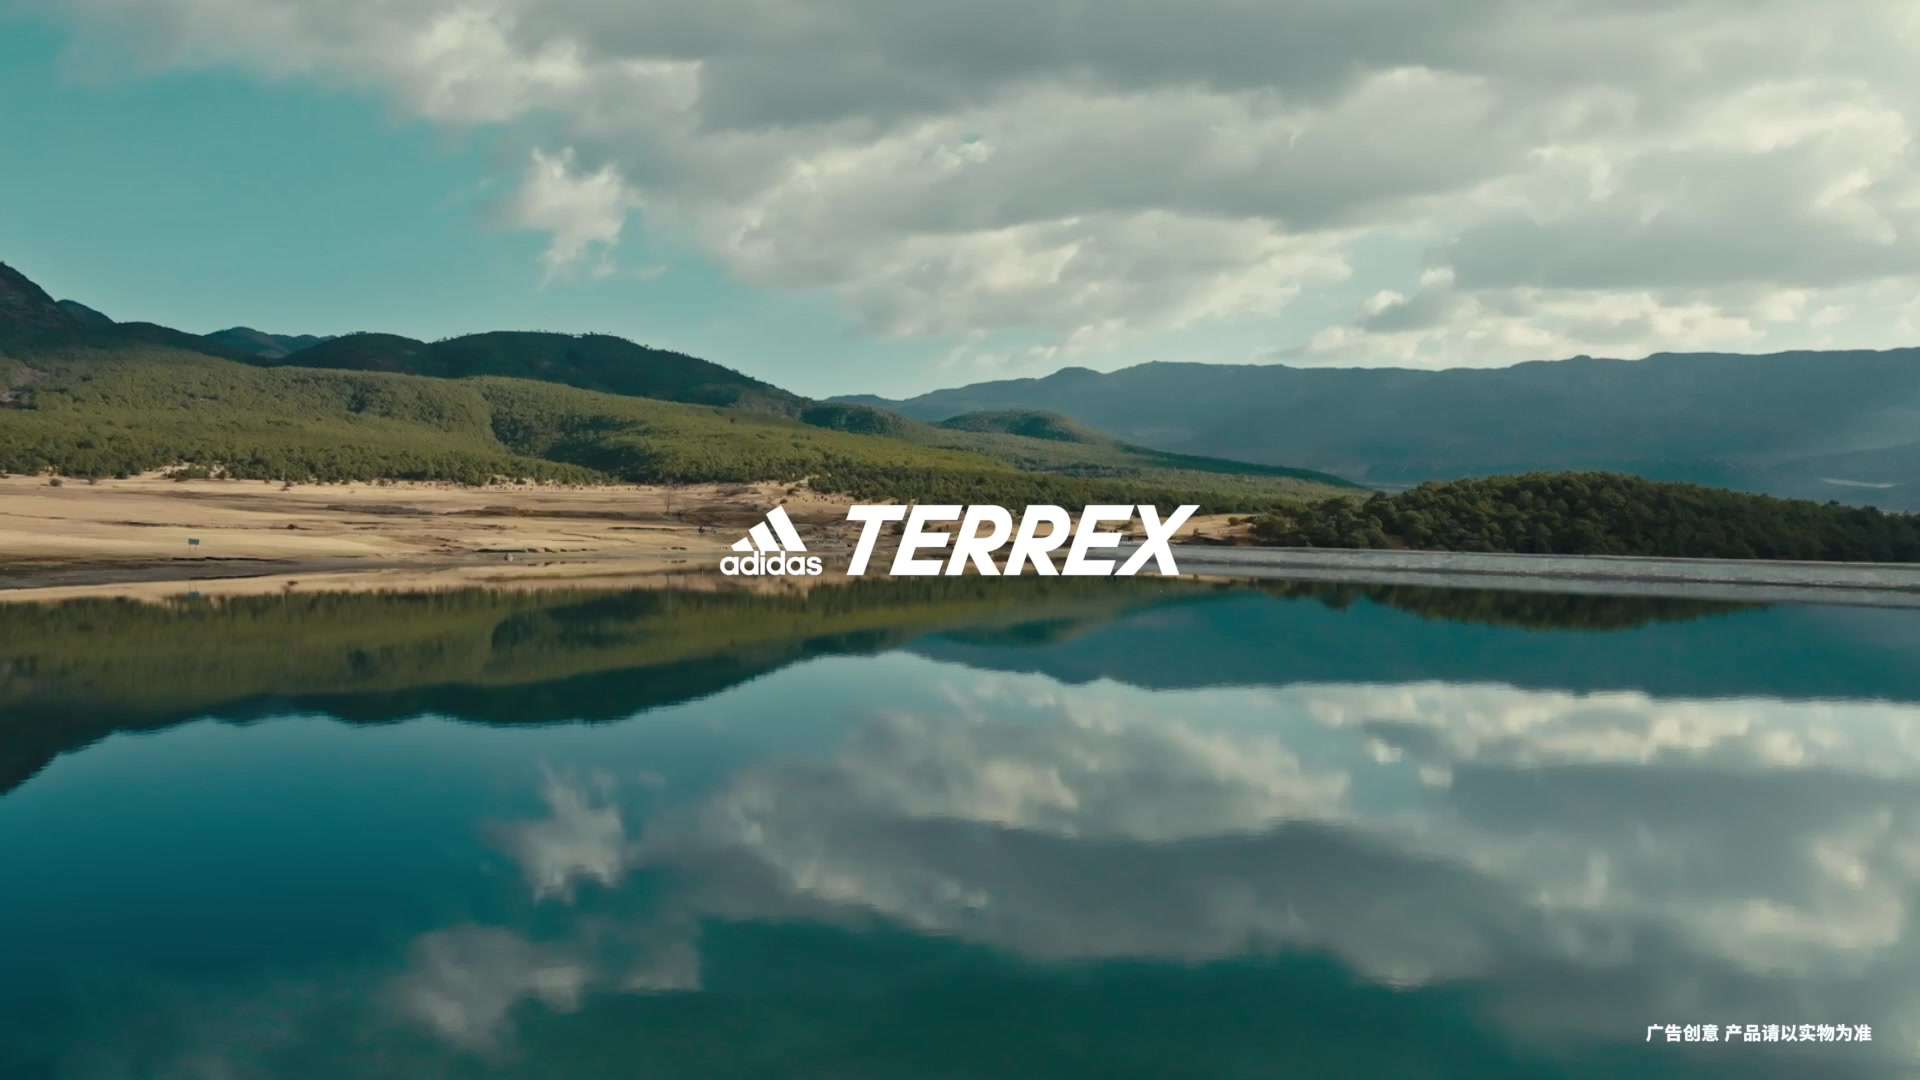 adidas TERREX集结于山峰-陆阳春